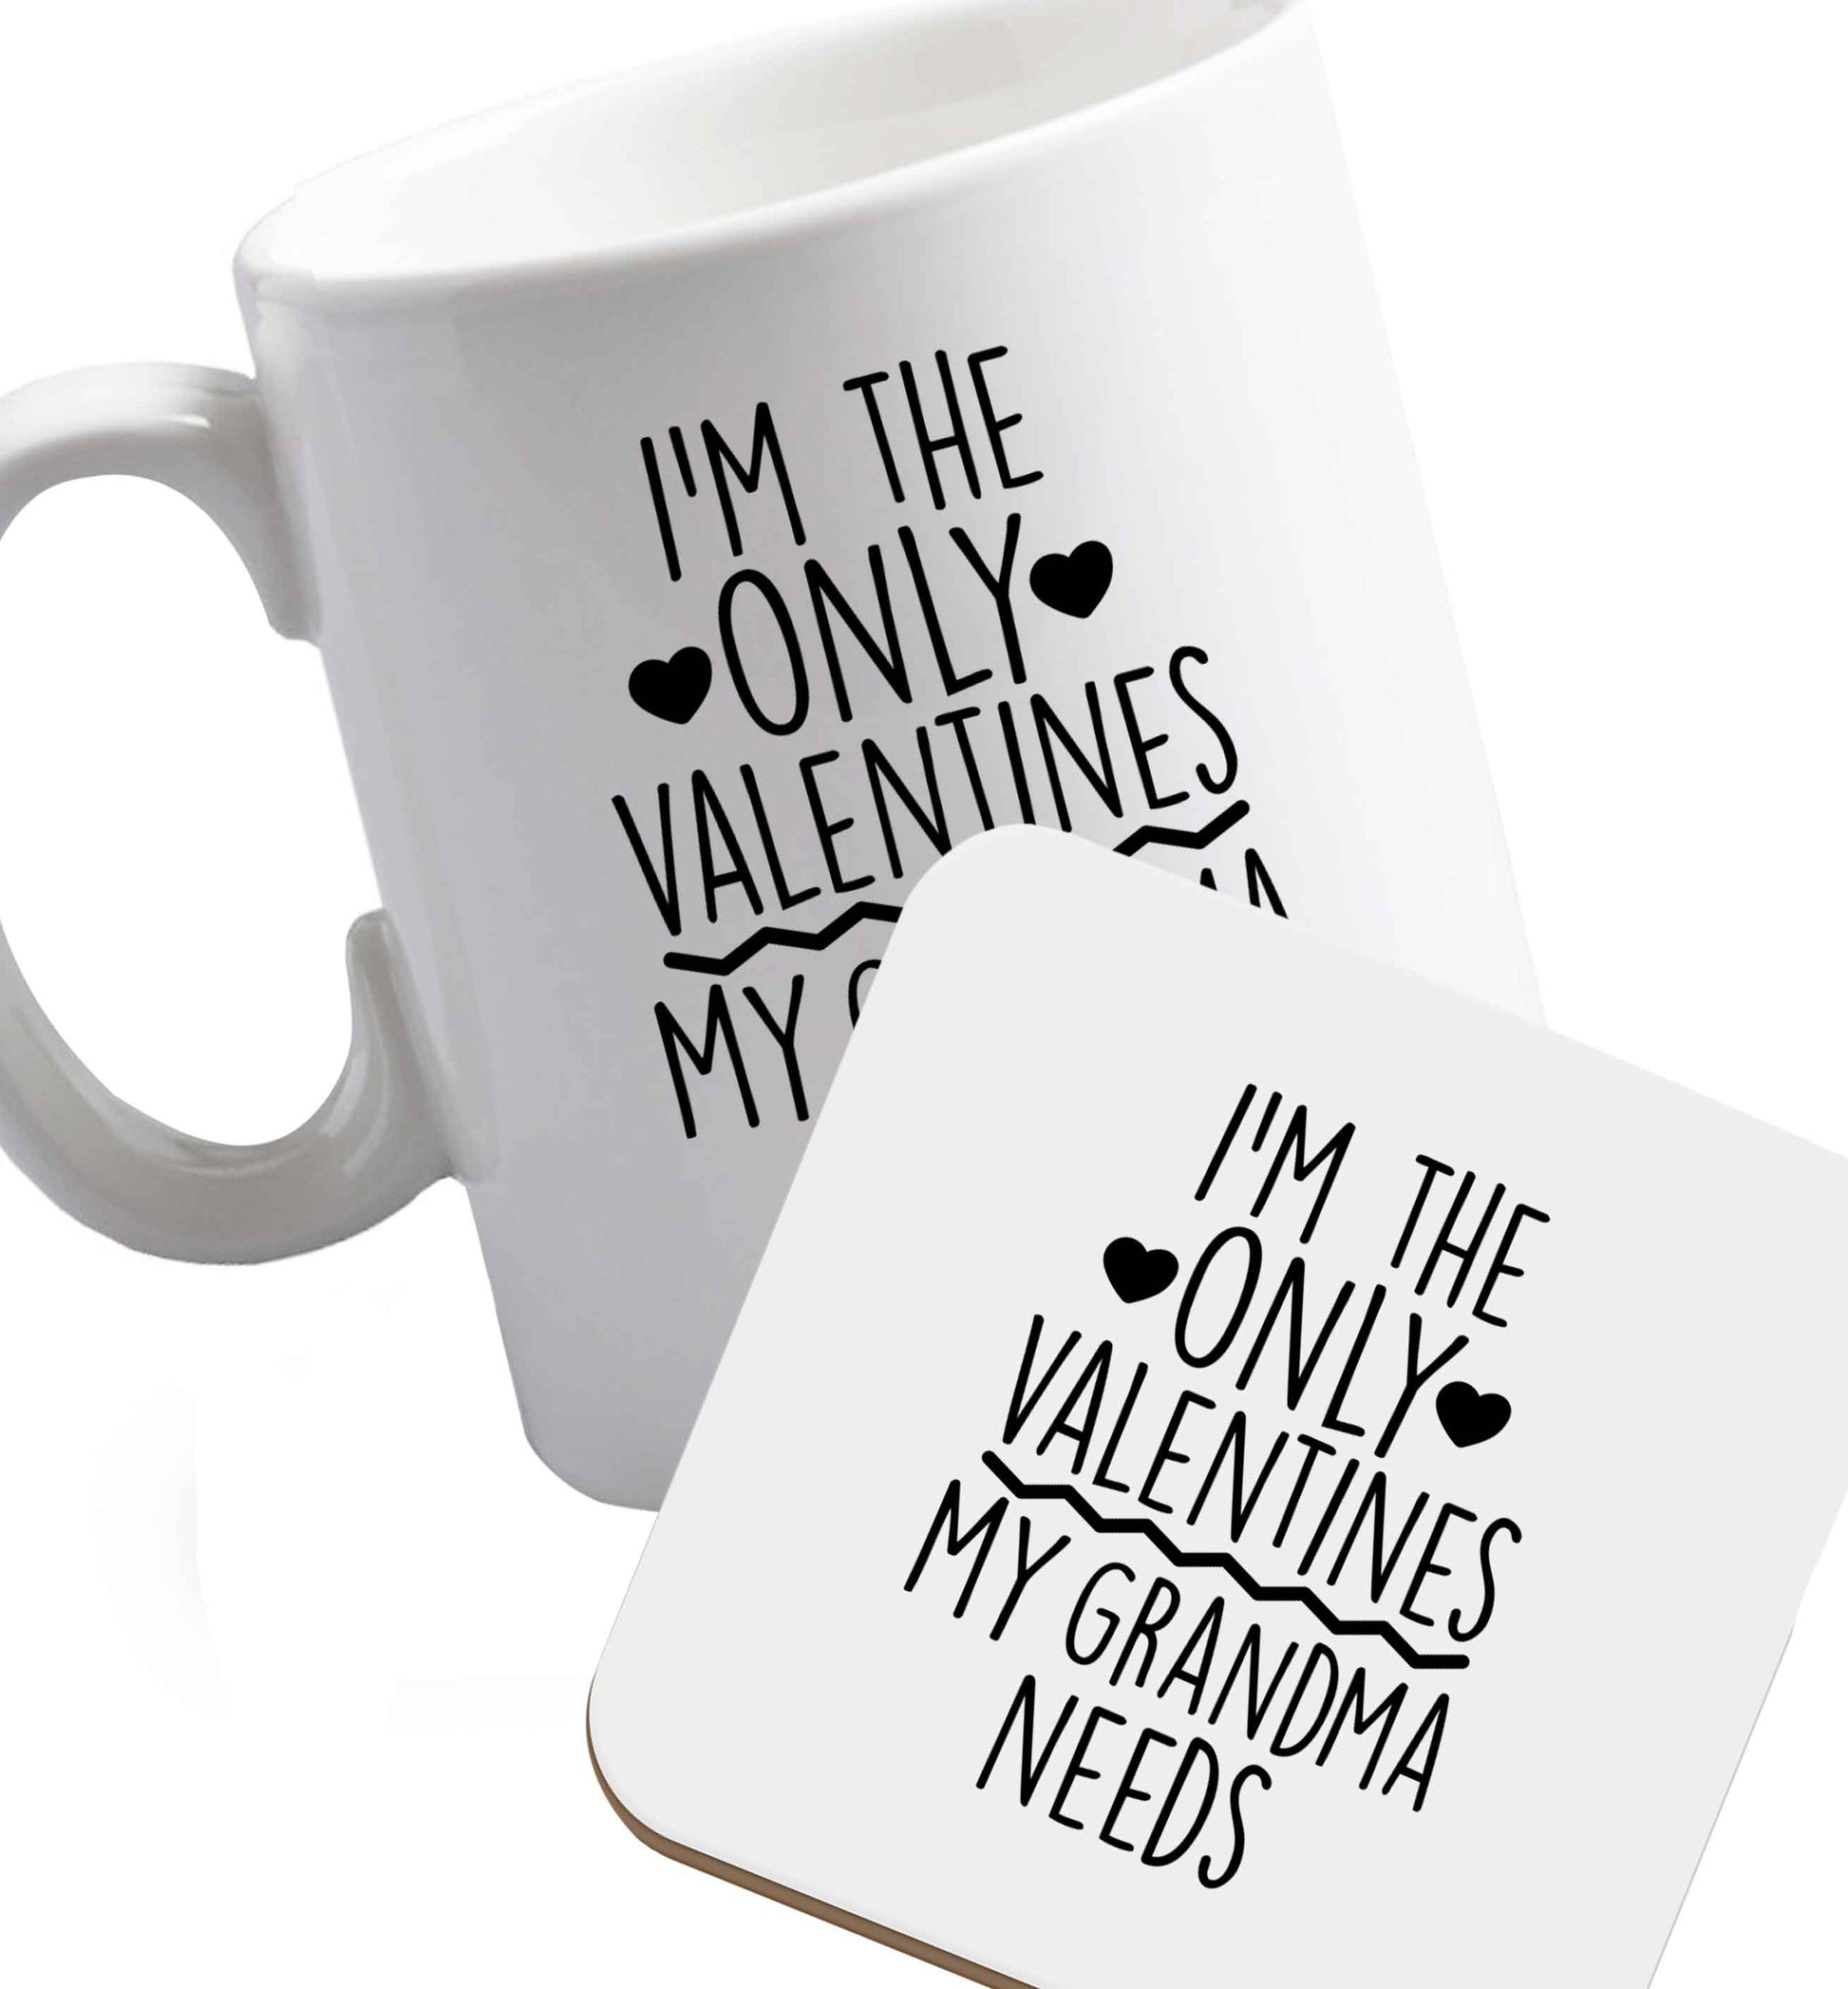 10 oz I'm the only valentines my grandma needs ceramic mug and coaster set right handed